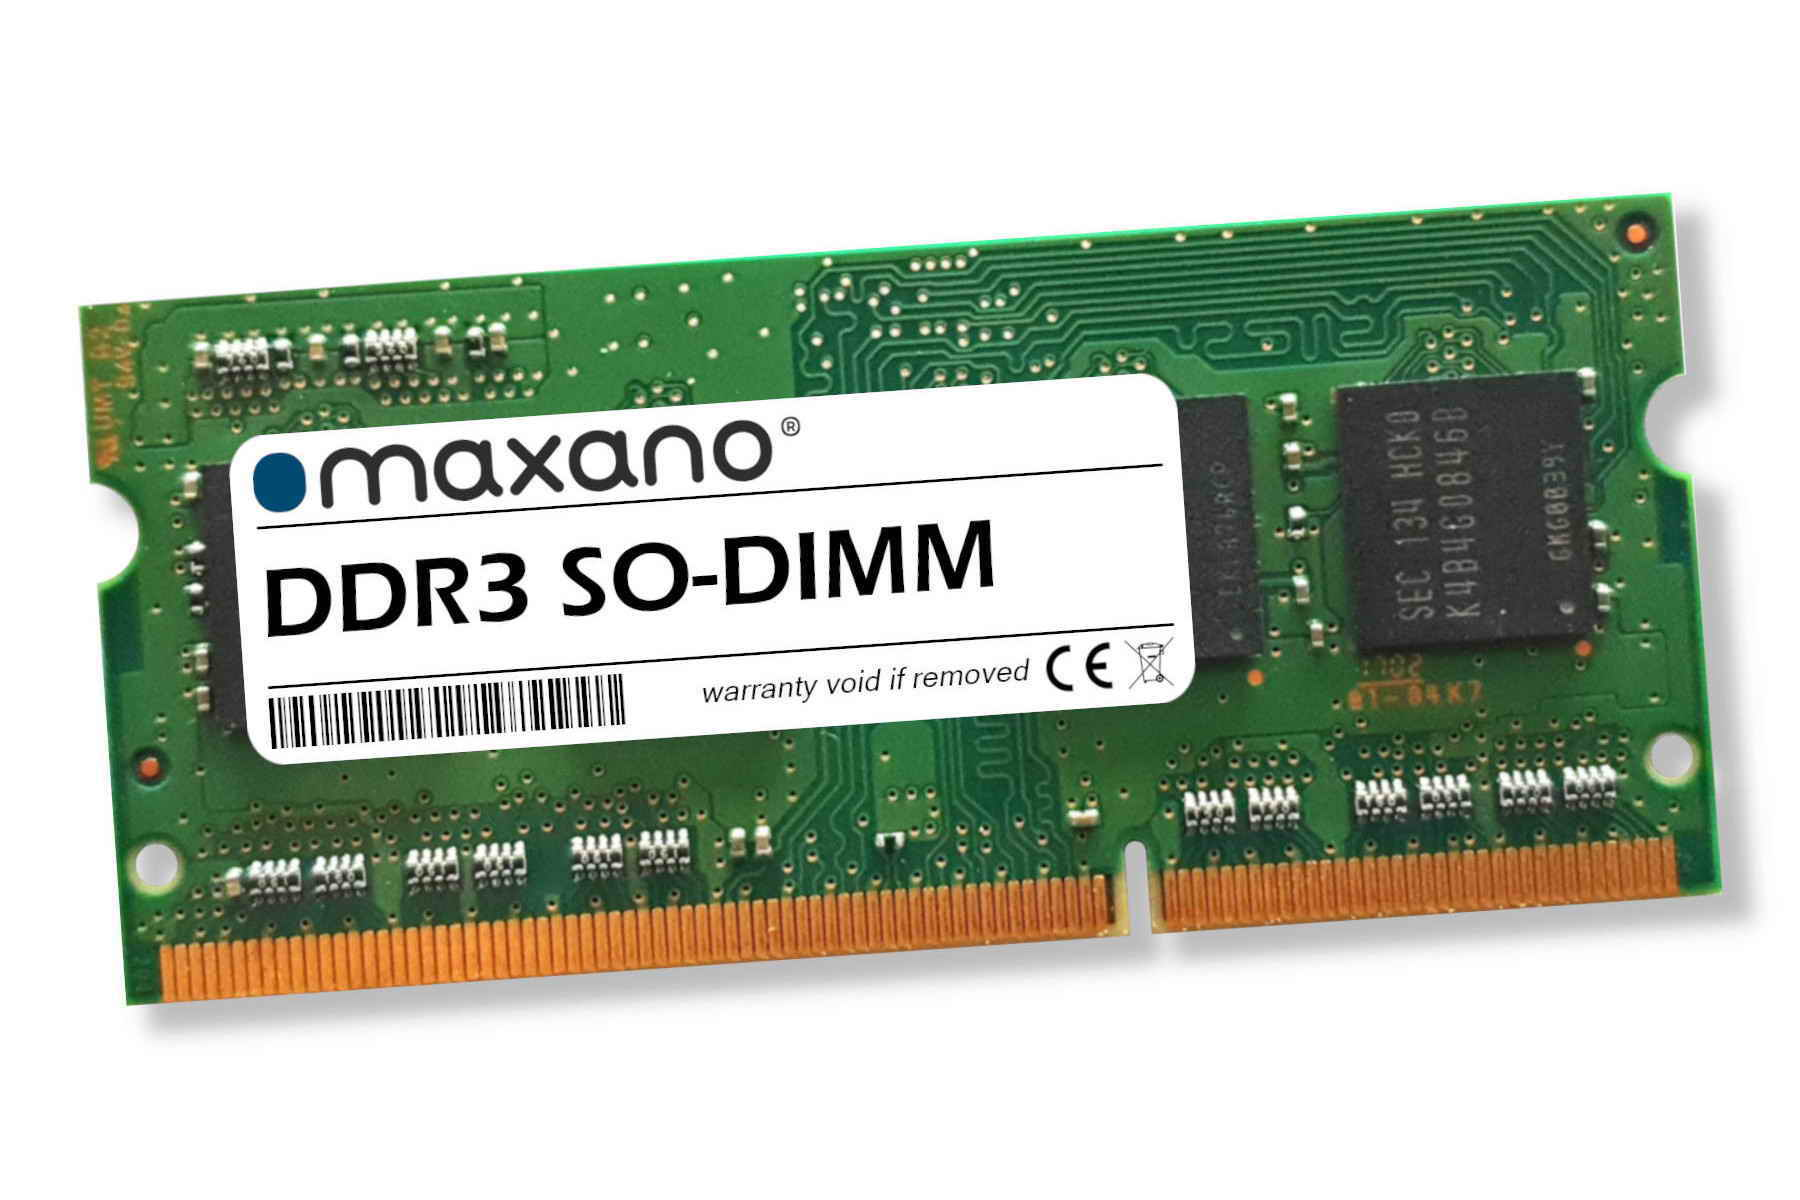 RAM GB AS6202T (PC3-12800 MAXANO 4 Asustor SO-DIMM) SDRAM 4GB für Arbeitsspeicher